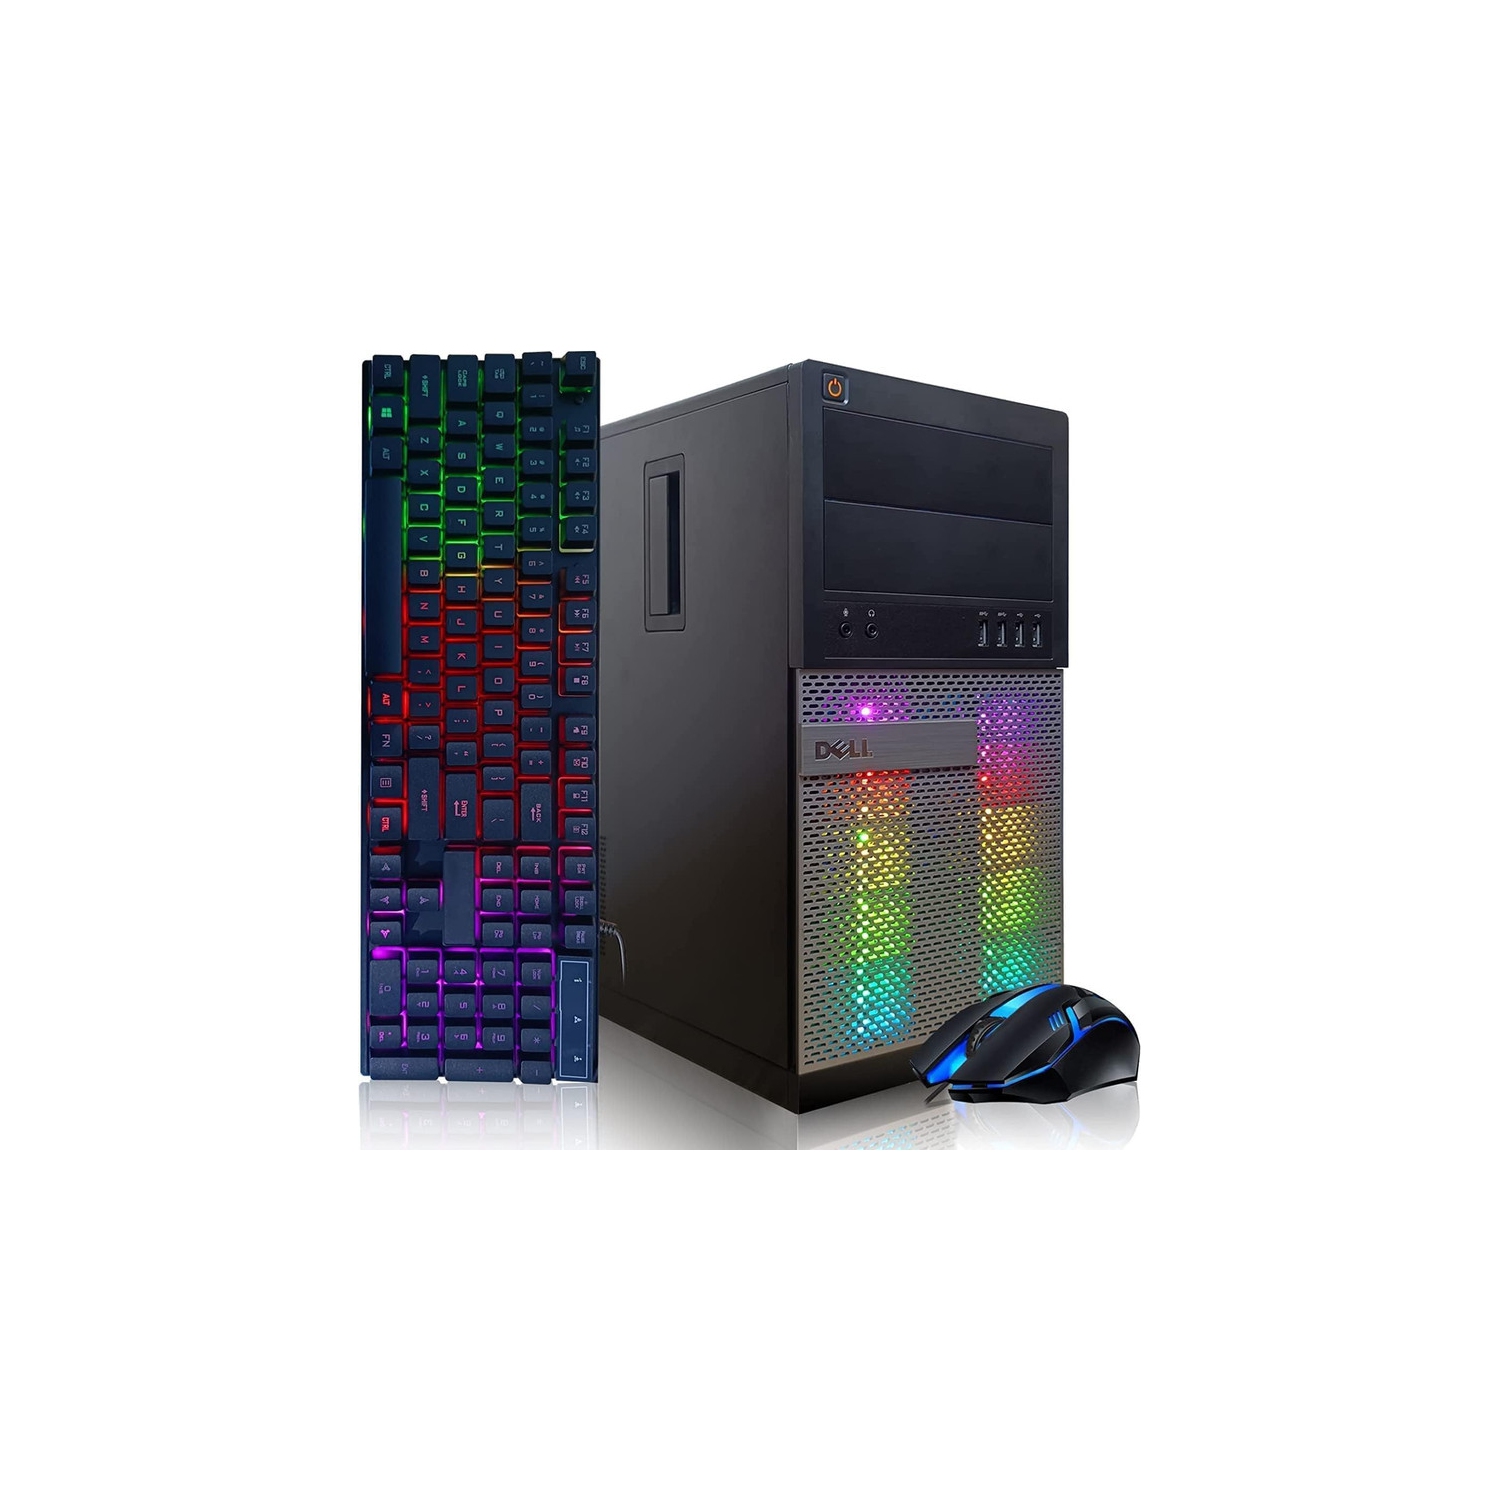 Dell RGB Gaming Desktop Computer, Intel Quad Core I7 up to 3.8GHz, Radeon RX 550 4G, 16GB Memory, 1T SSD, RGB Keyboard & Mouse, 600M WiFi & Bluetooth, Win 10 Pro -Refurbished